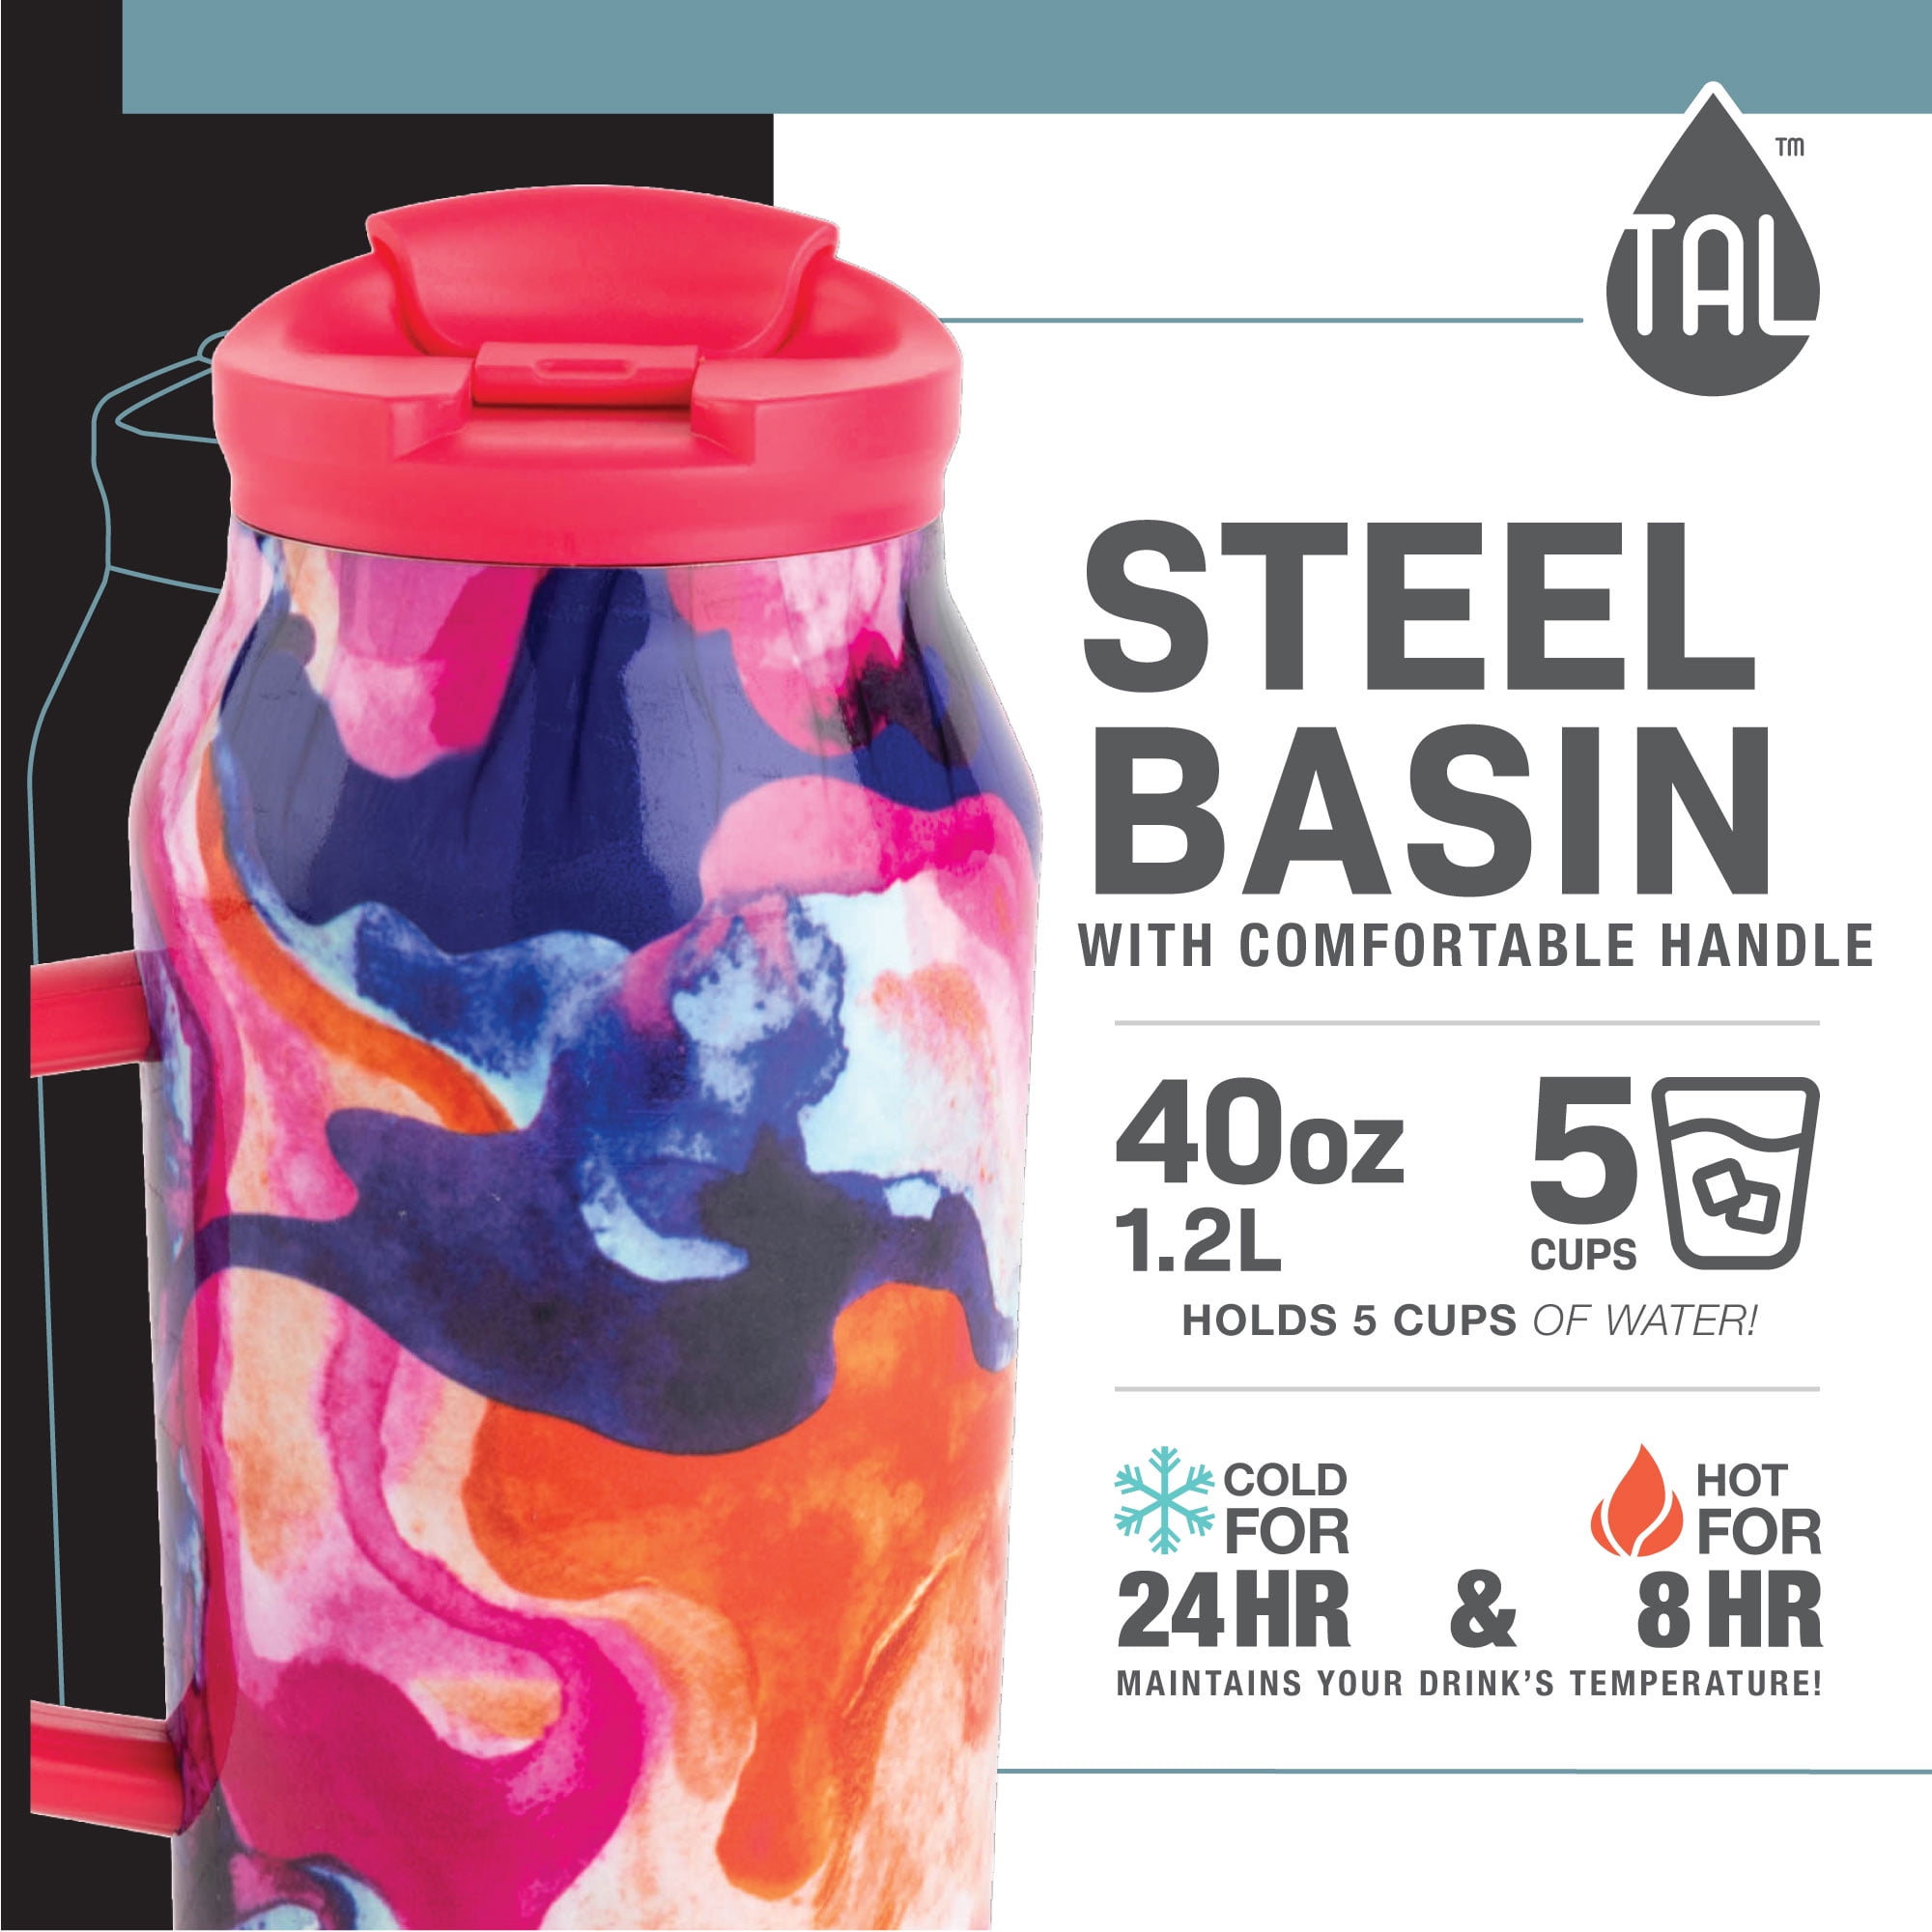 TAL Stainless Steel Basin Tumbler 40 fl oz, Pink Leopard 